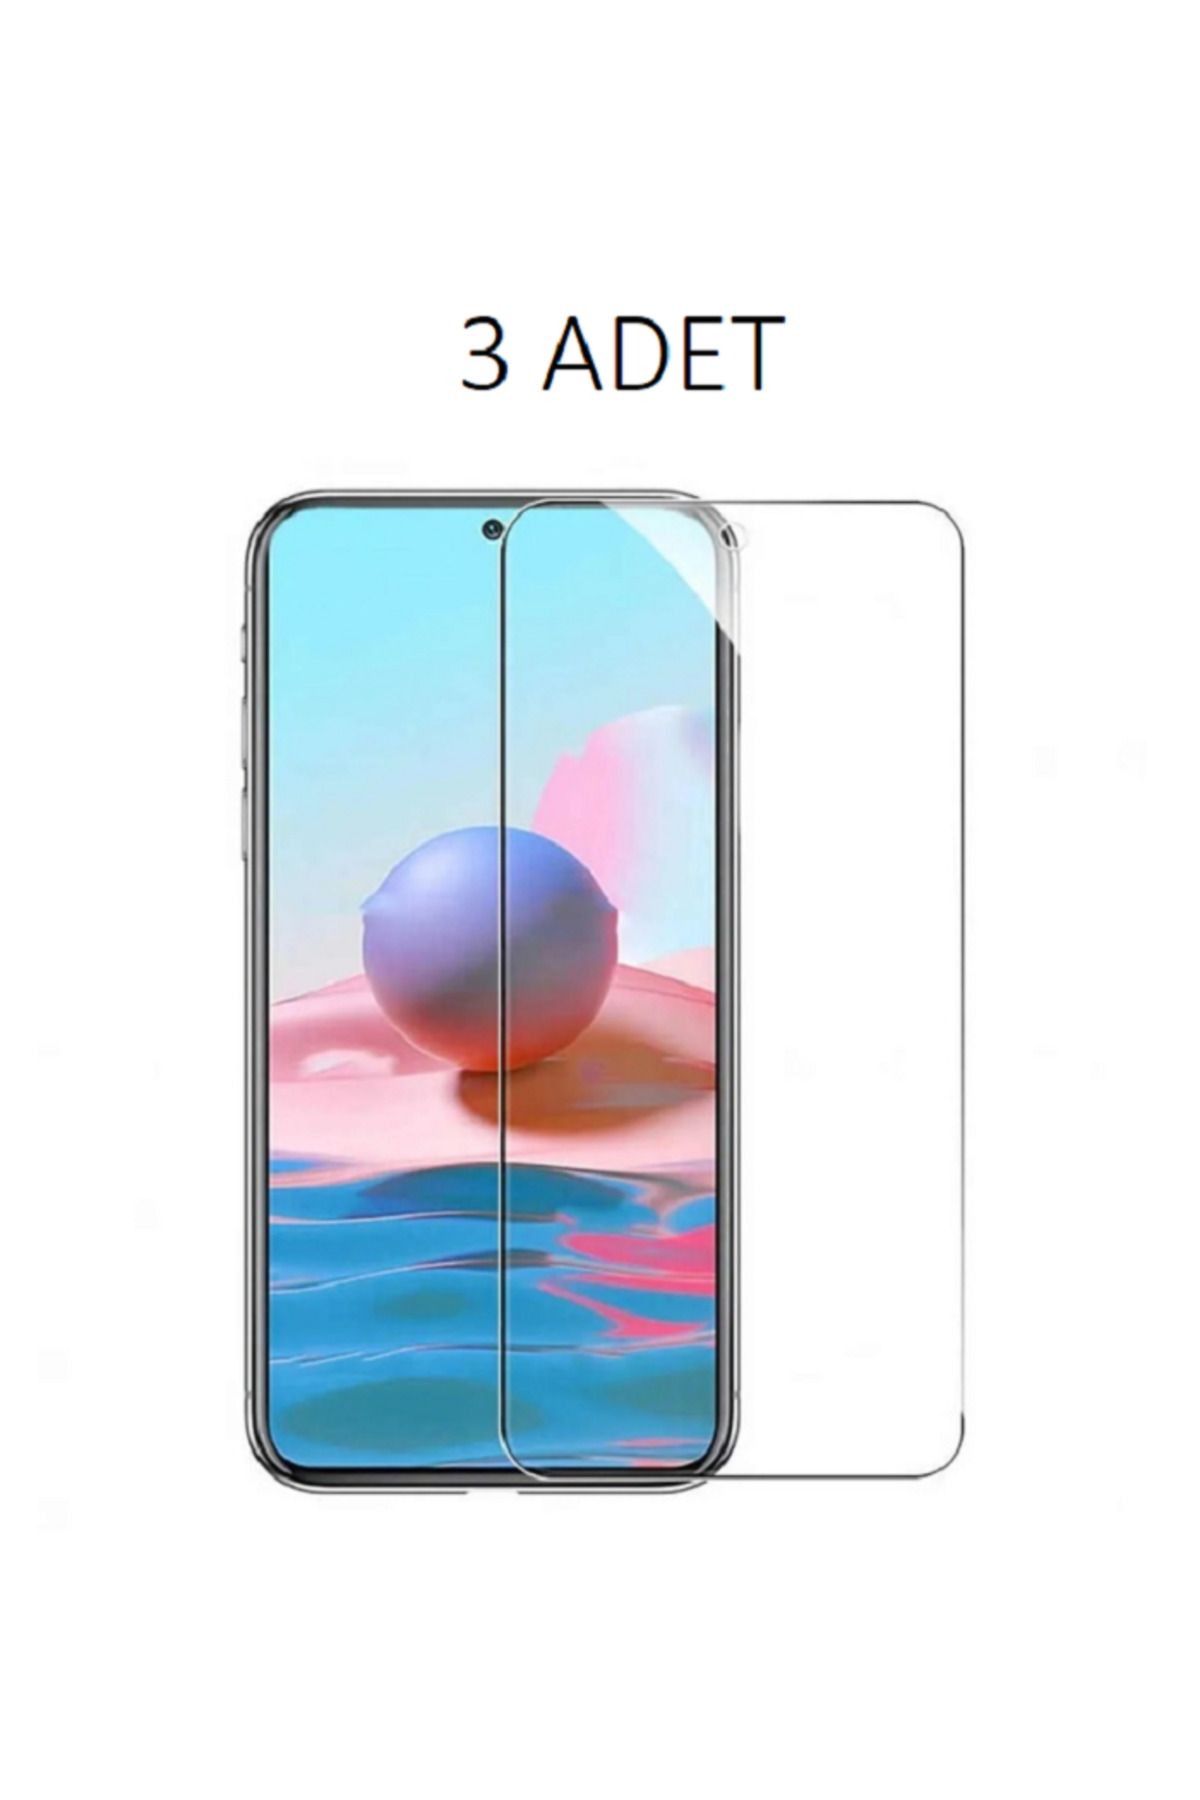 LG 3 ADET LG G8S Thinq Uyumlu Şeffaf Esnek Nano Ekran Koruyucu